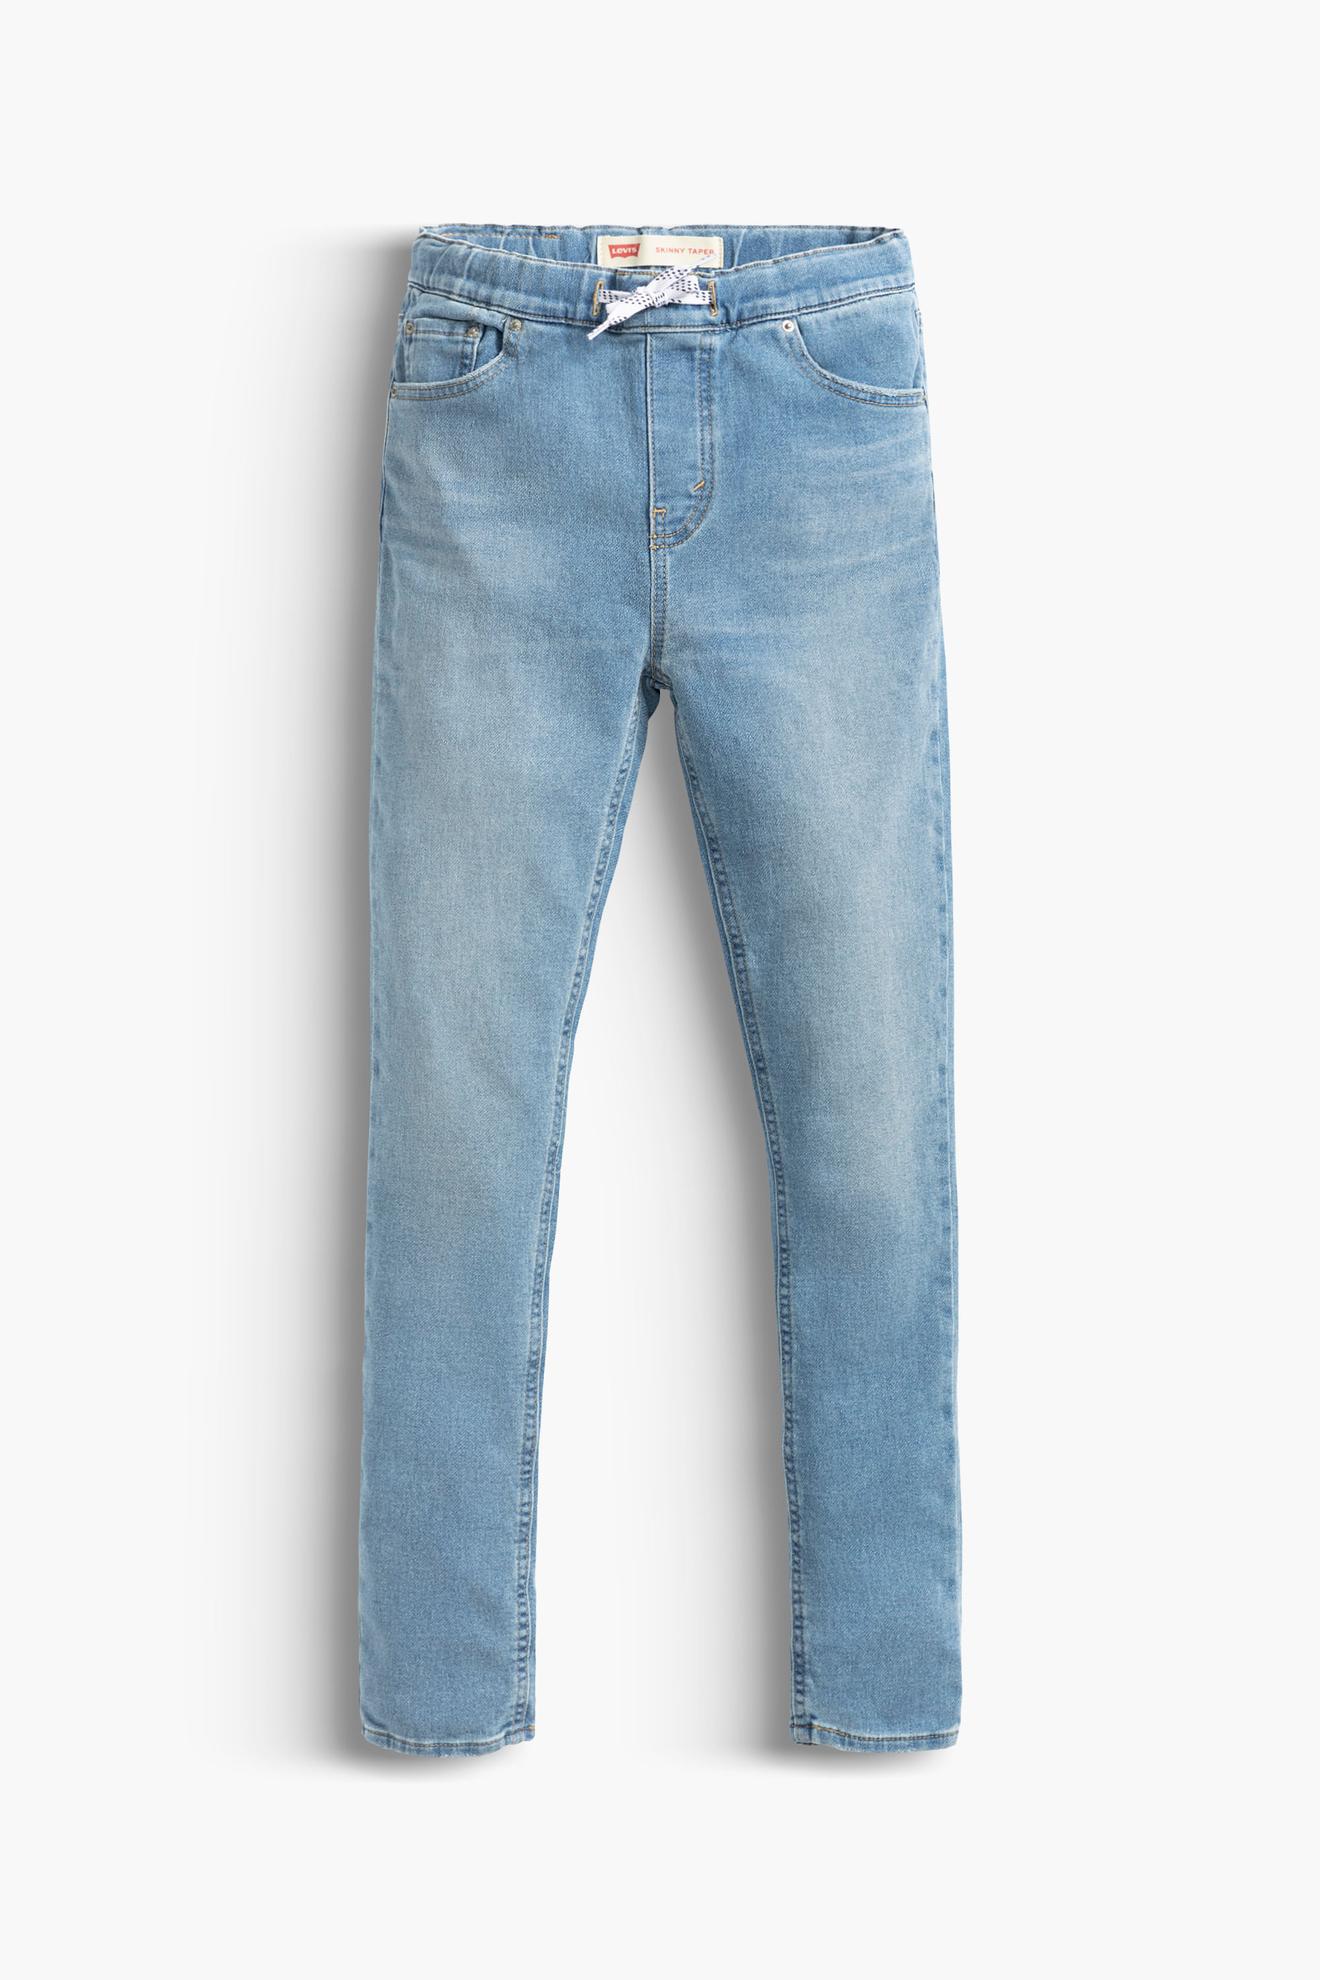 Oferta de Calça Jeans Levi's® Skinny Taper Fit Infantil por R$139,95 em Levi's